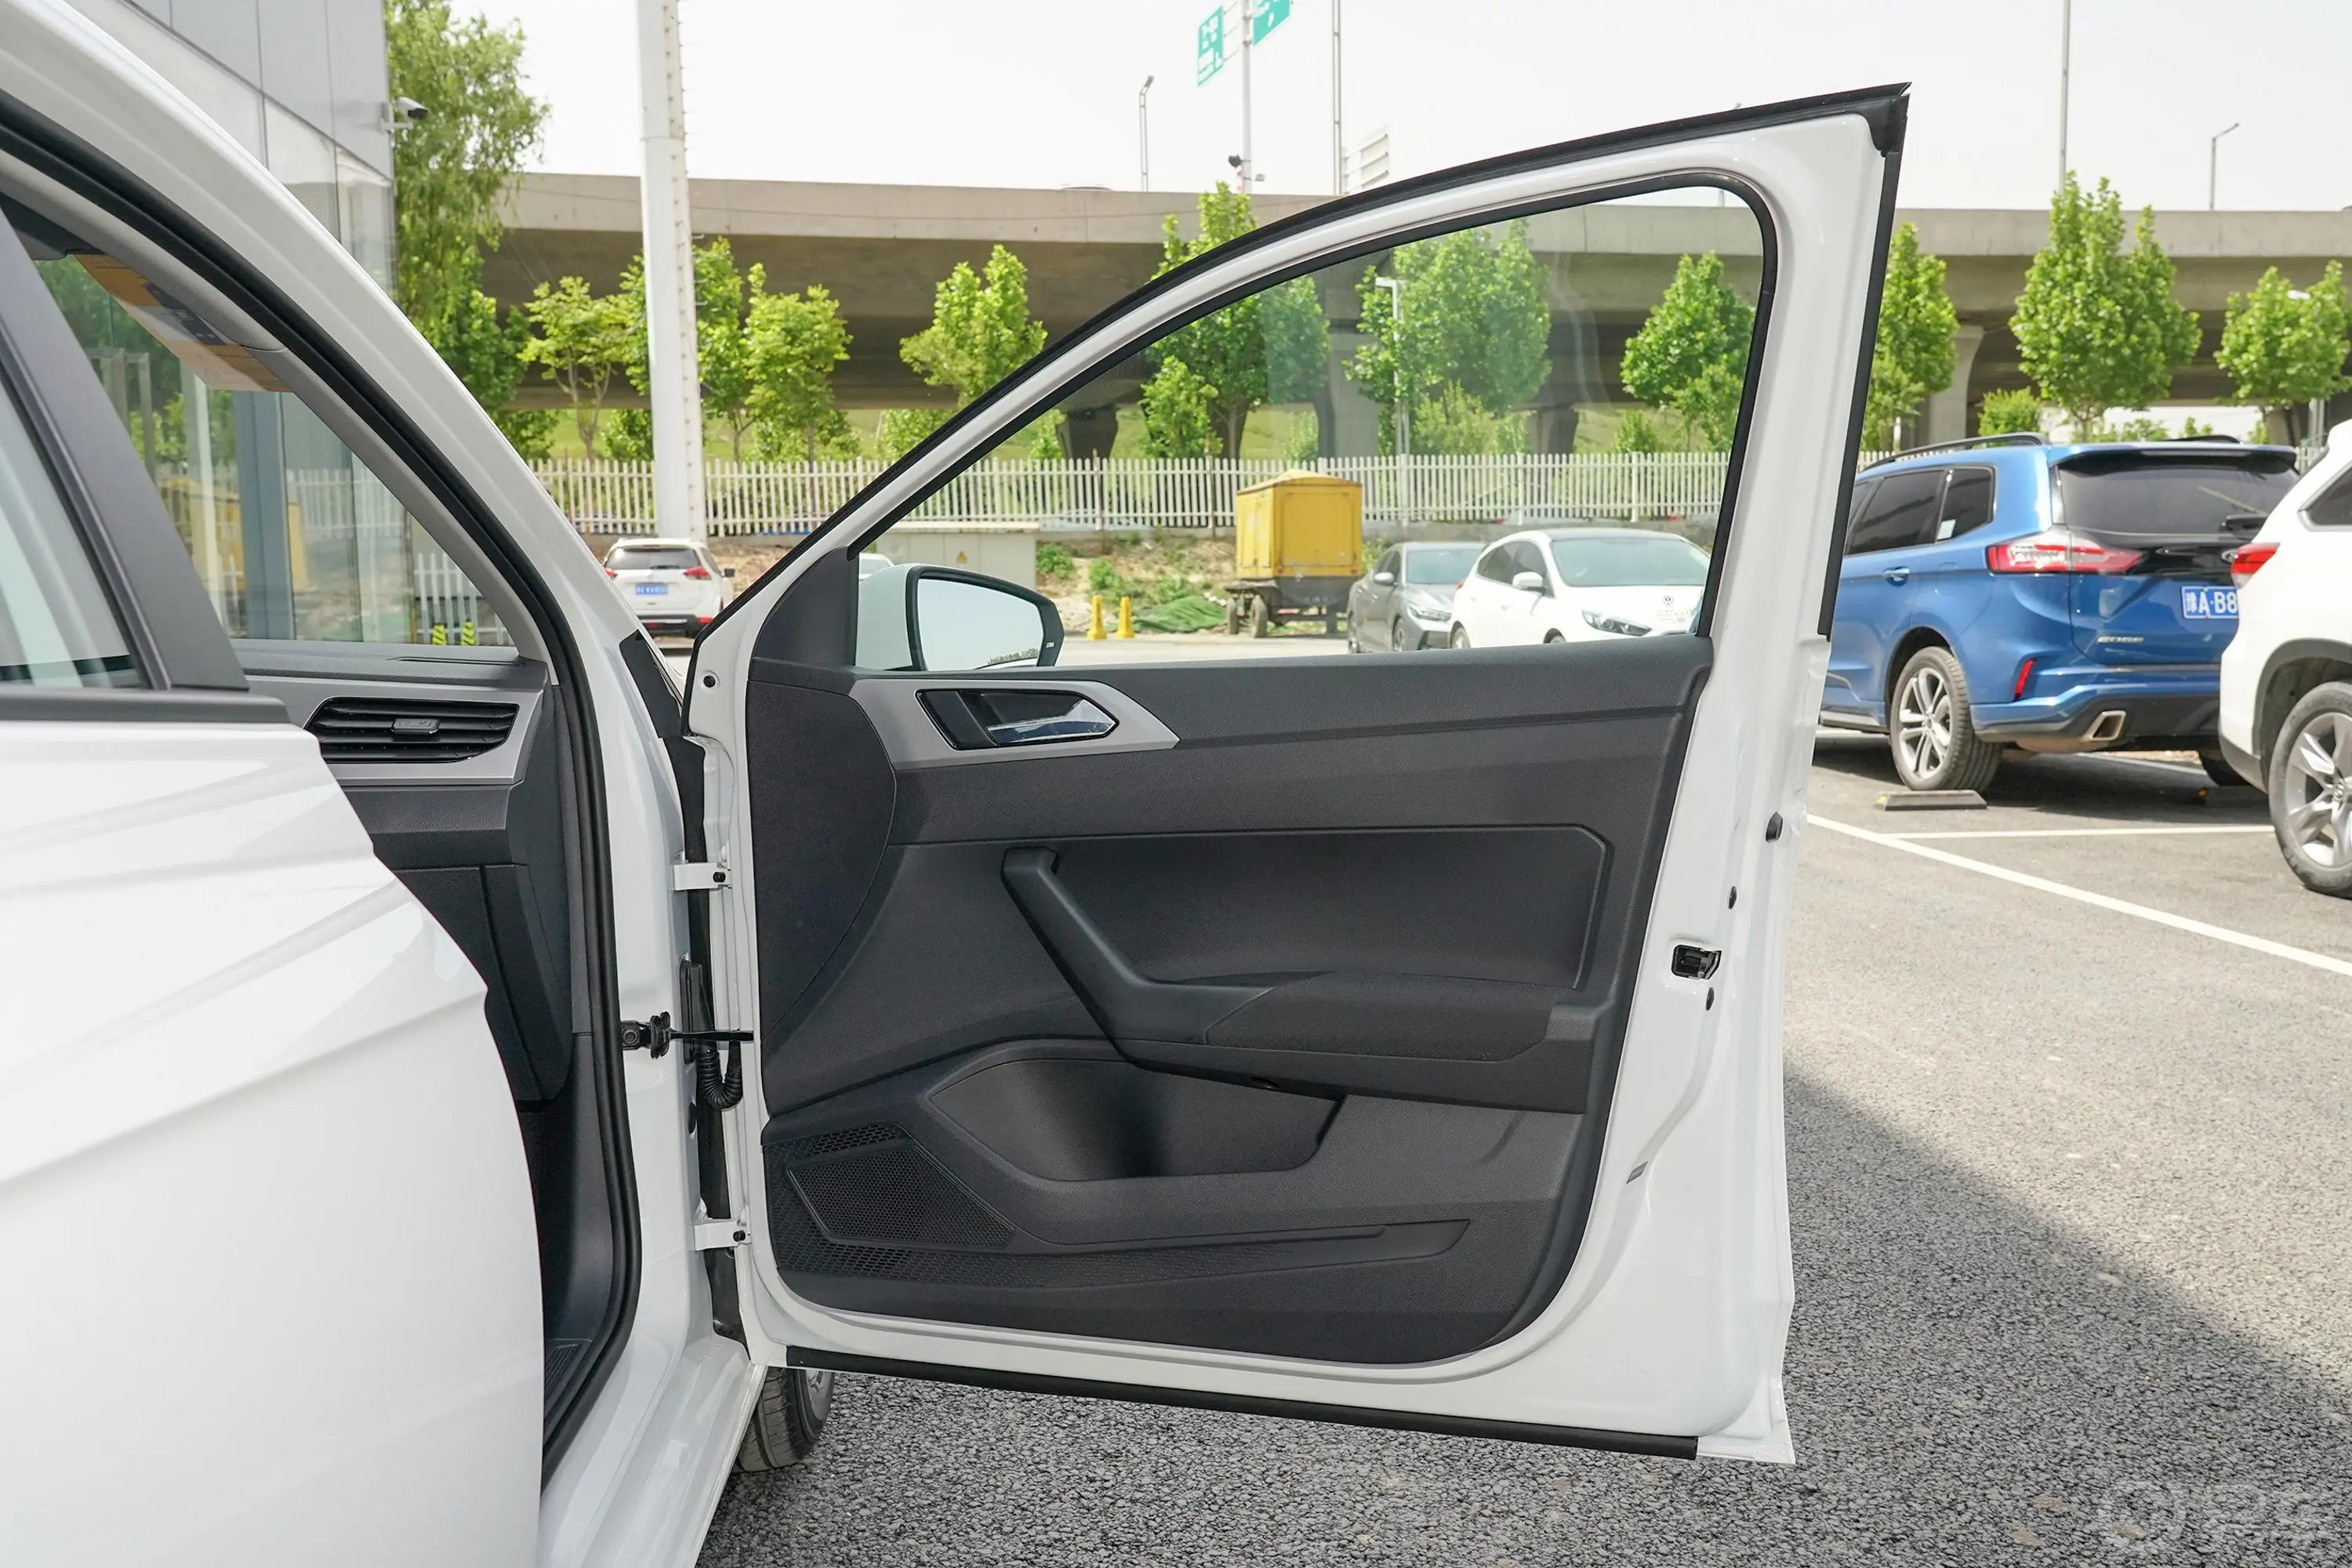 PoloPlus 1.5L 自动全景乐享版副驾驶员车门